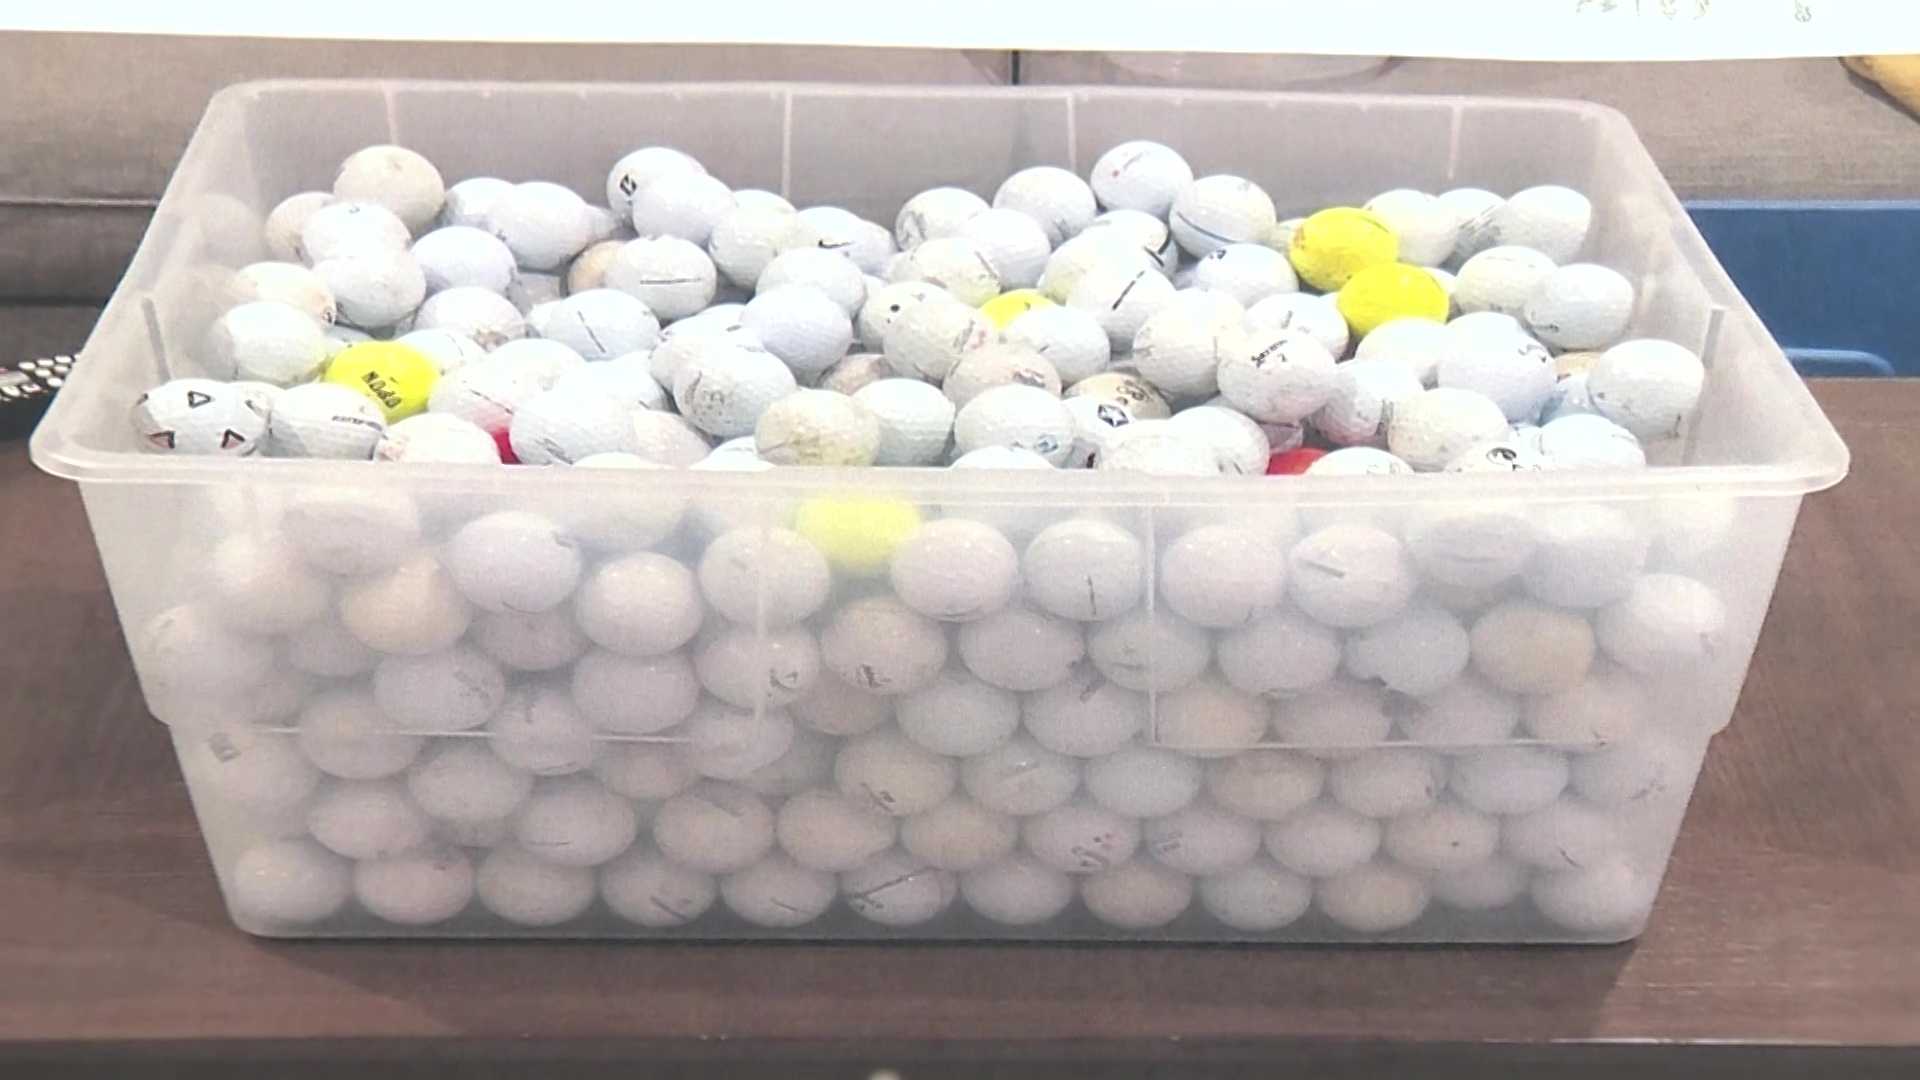 Massachusetts family awarded $5M for golf ball damage to home